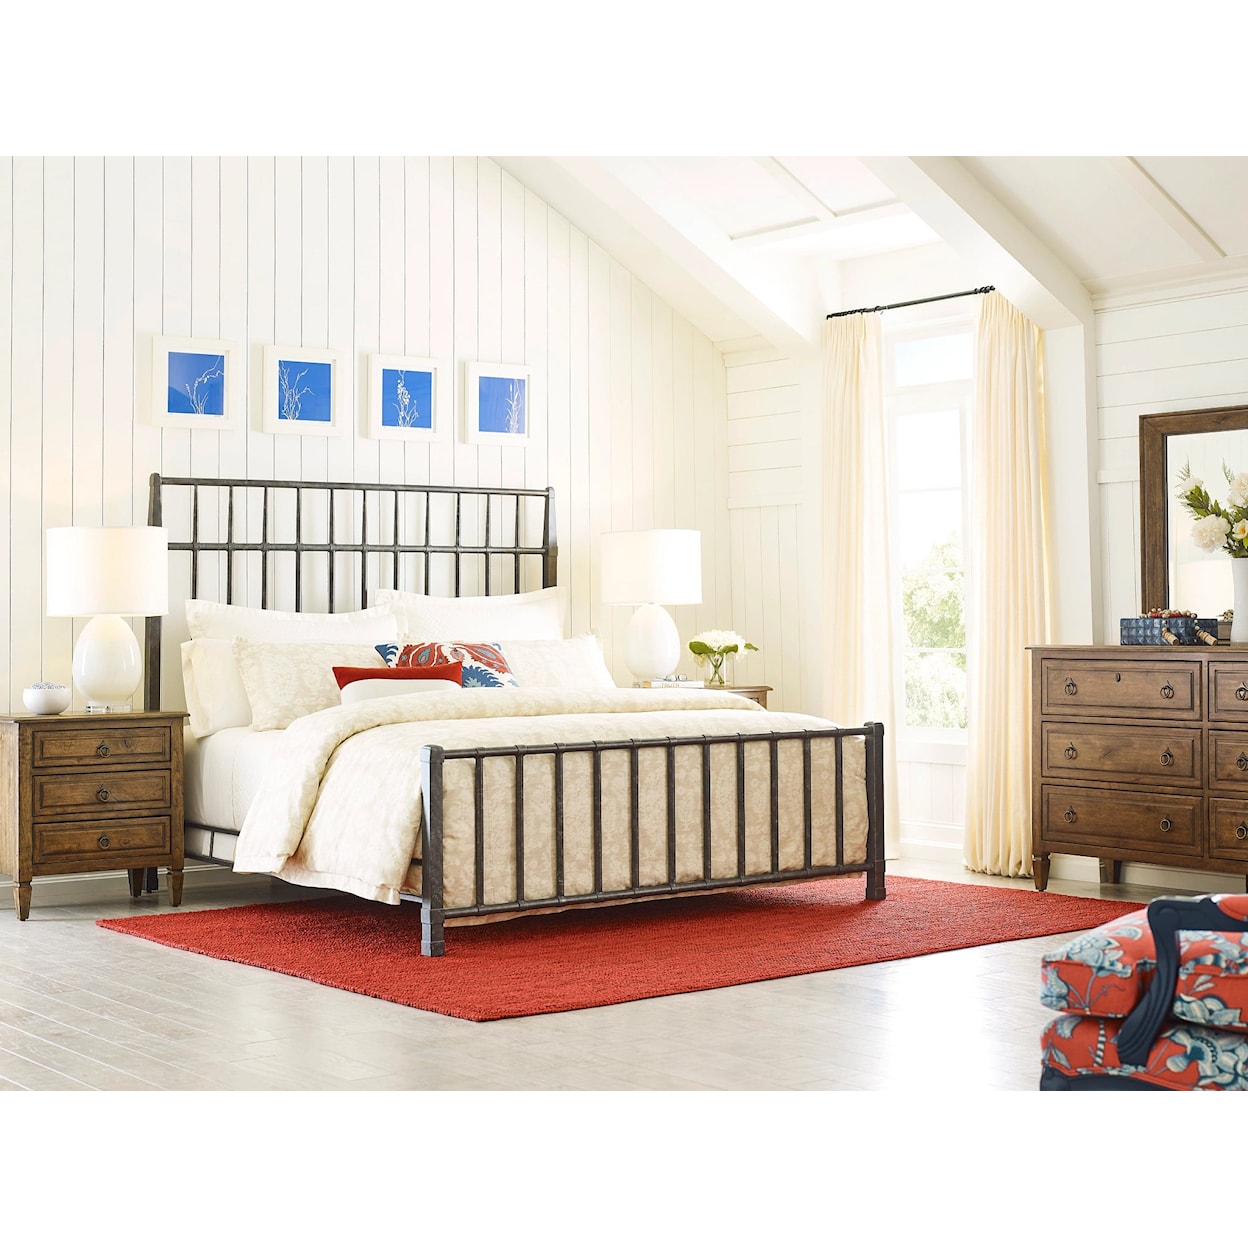 Kincaid Furniture Ansley Sylvan Queen Metal Bed Complete